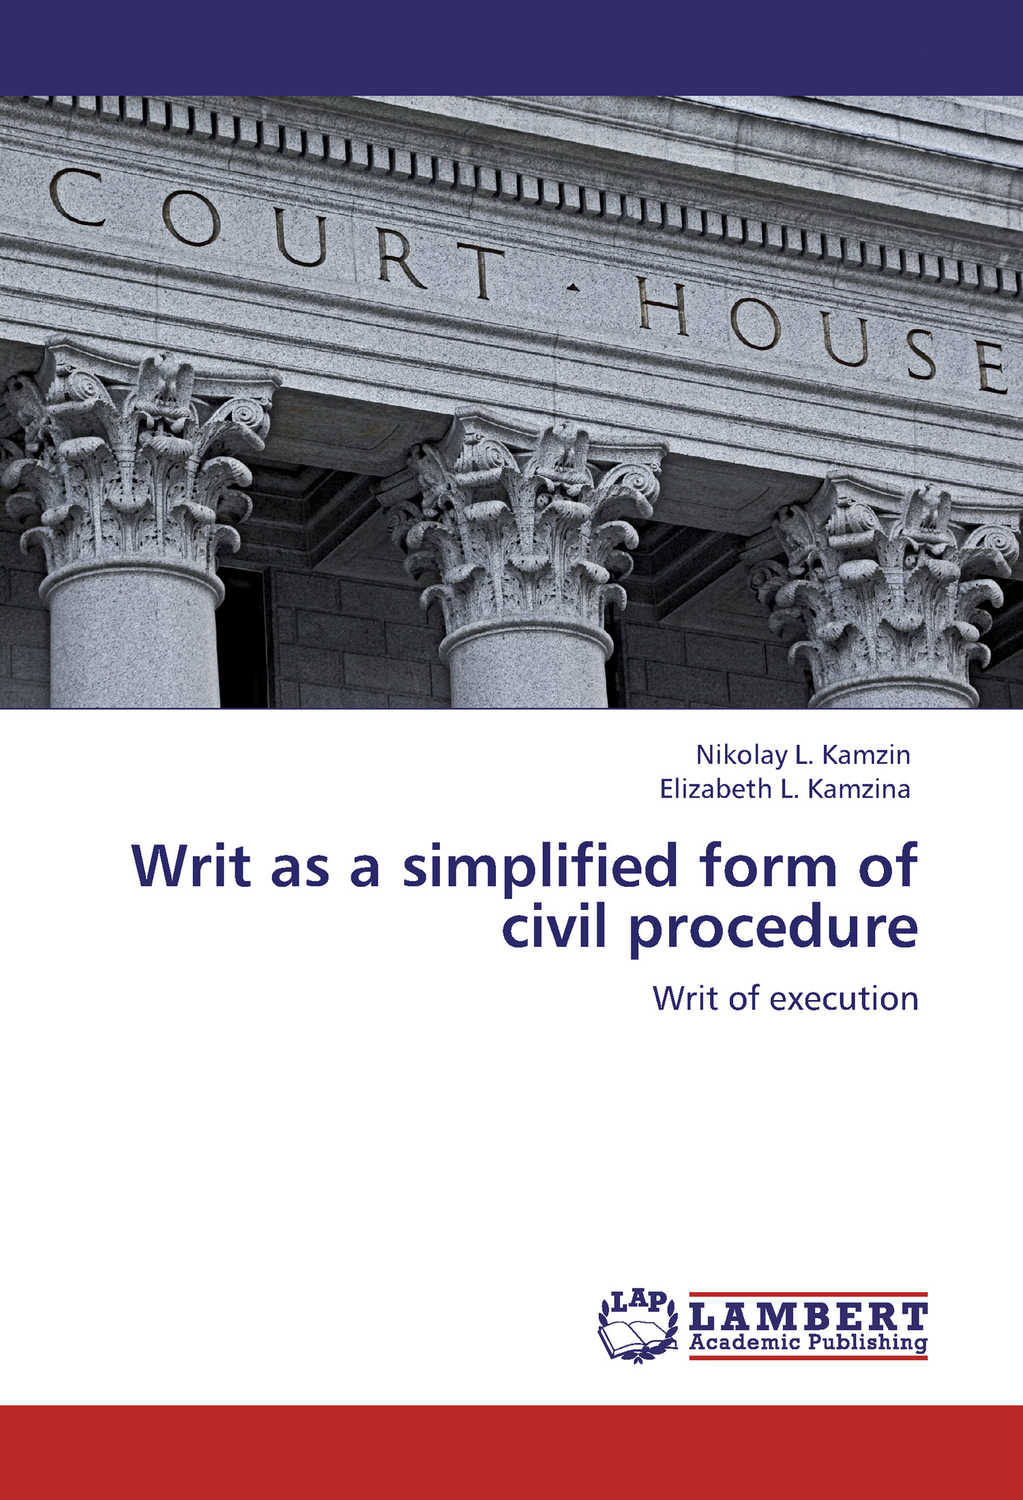 Камзин Николай, Камзина Елизавета - «Writ as a simplified form of civil procedure. Writ of execution»